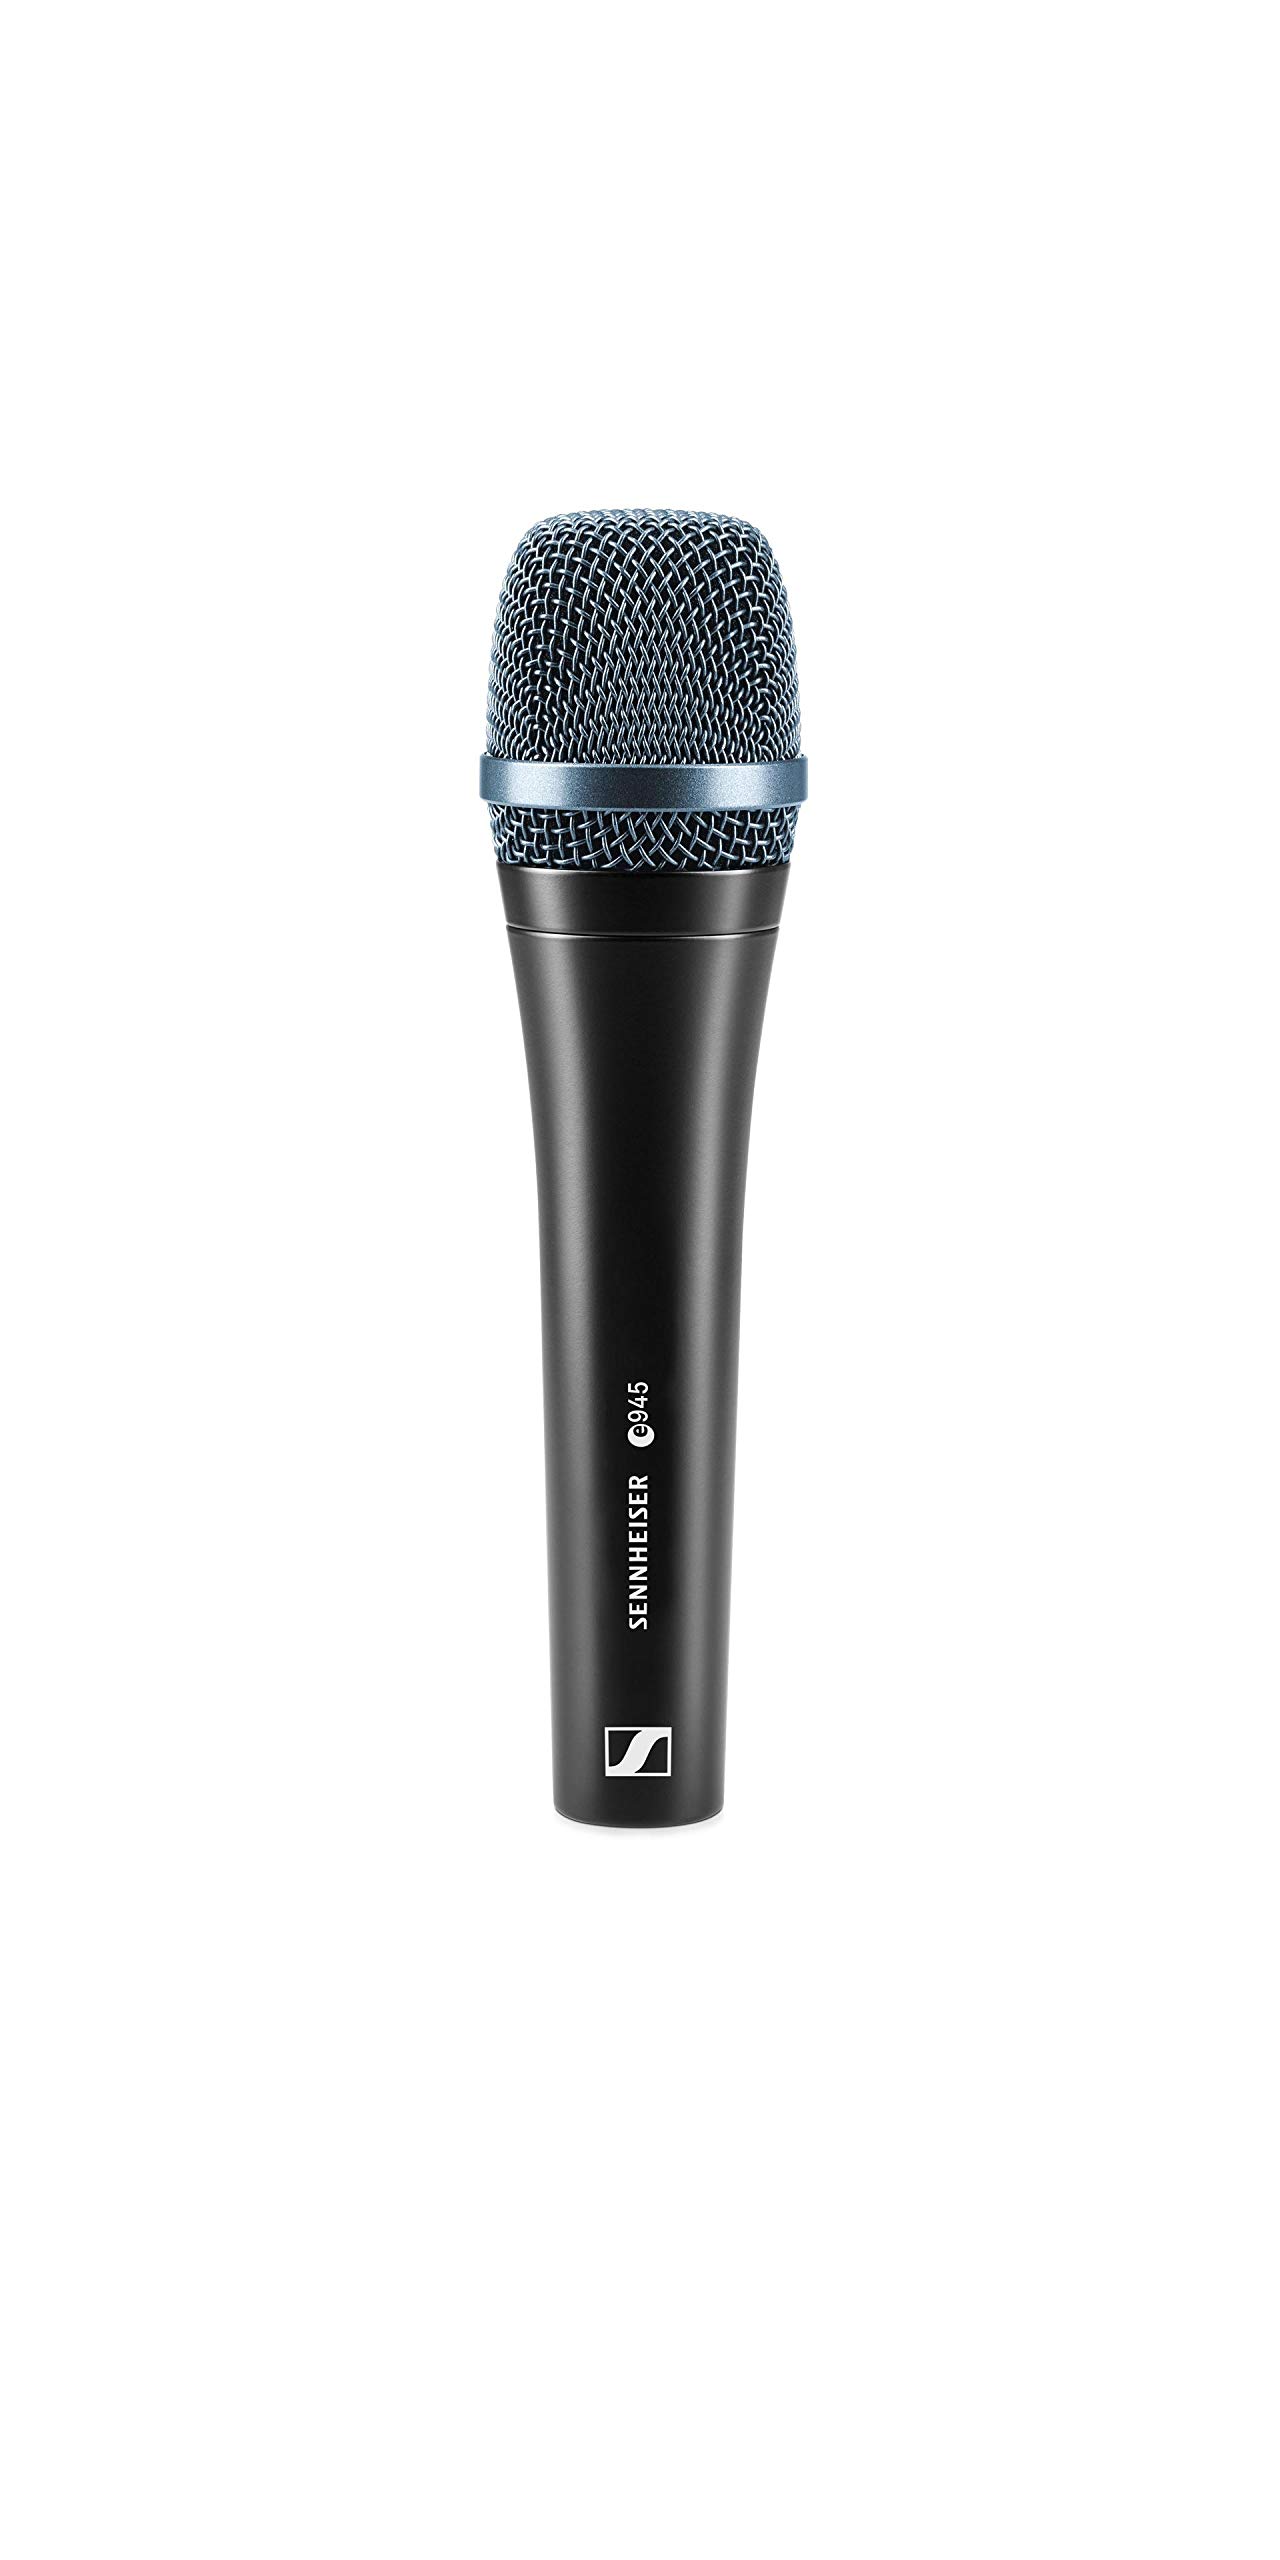 Sennheiser Pro Audio Microphone vocal supercardioïde dynamique professionnel E 945